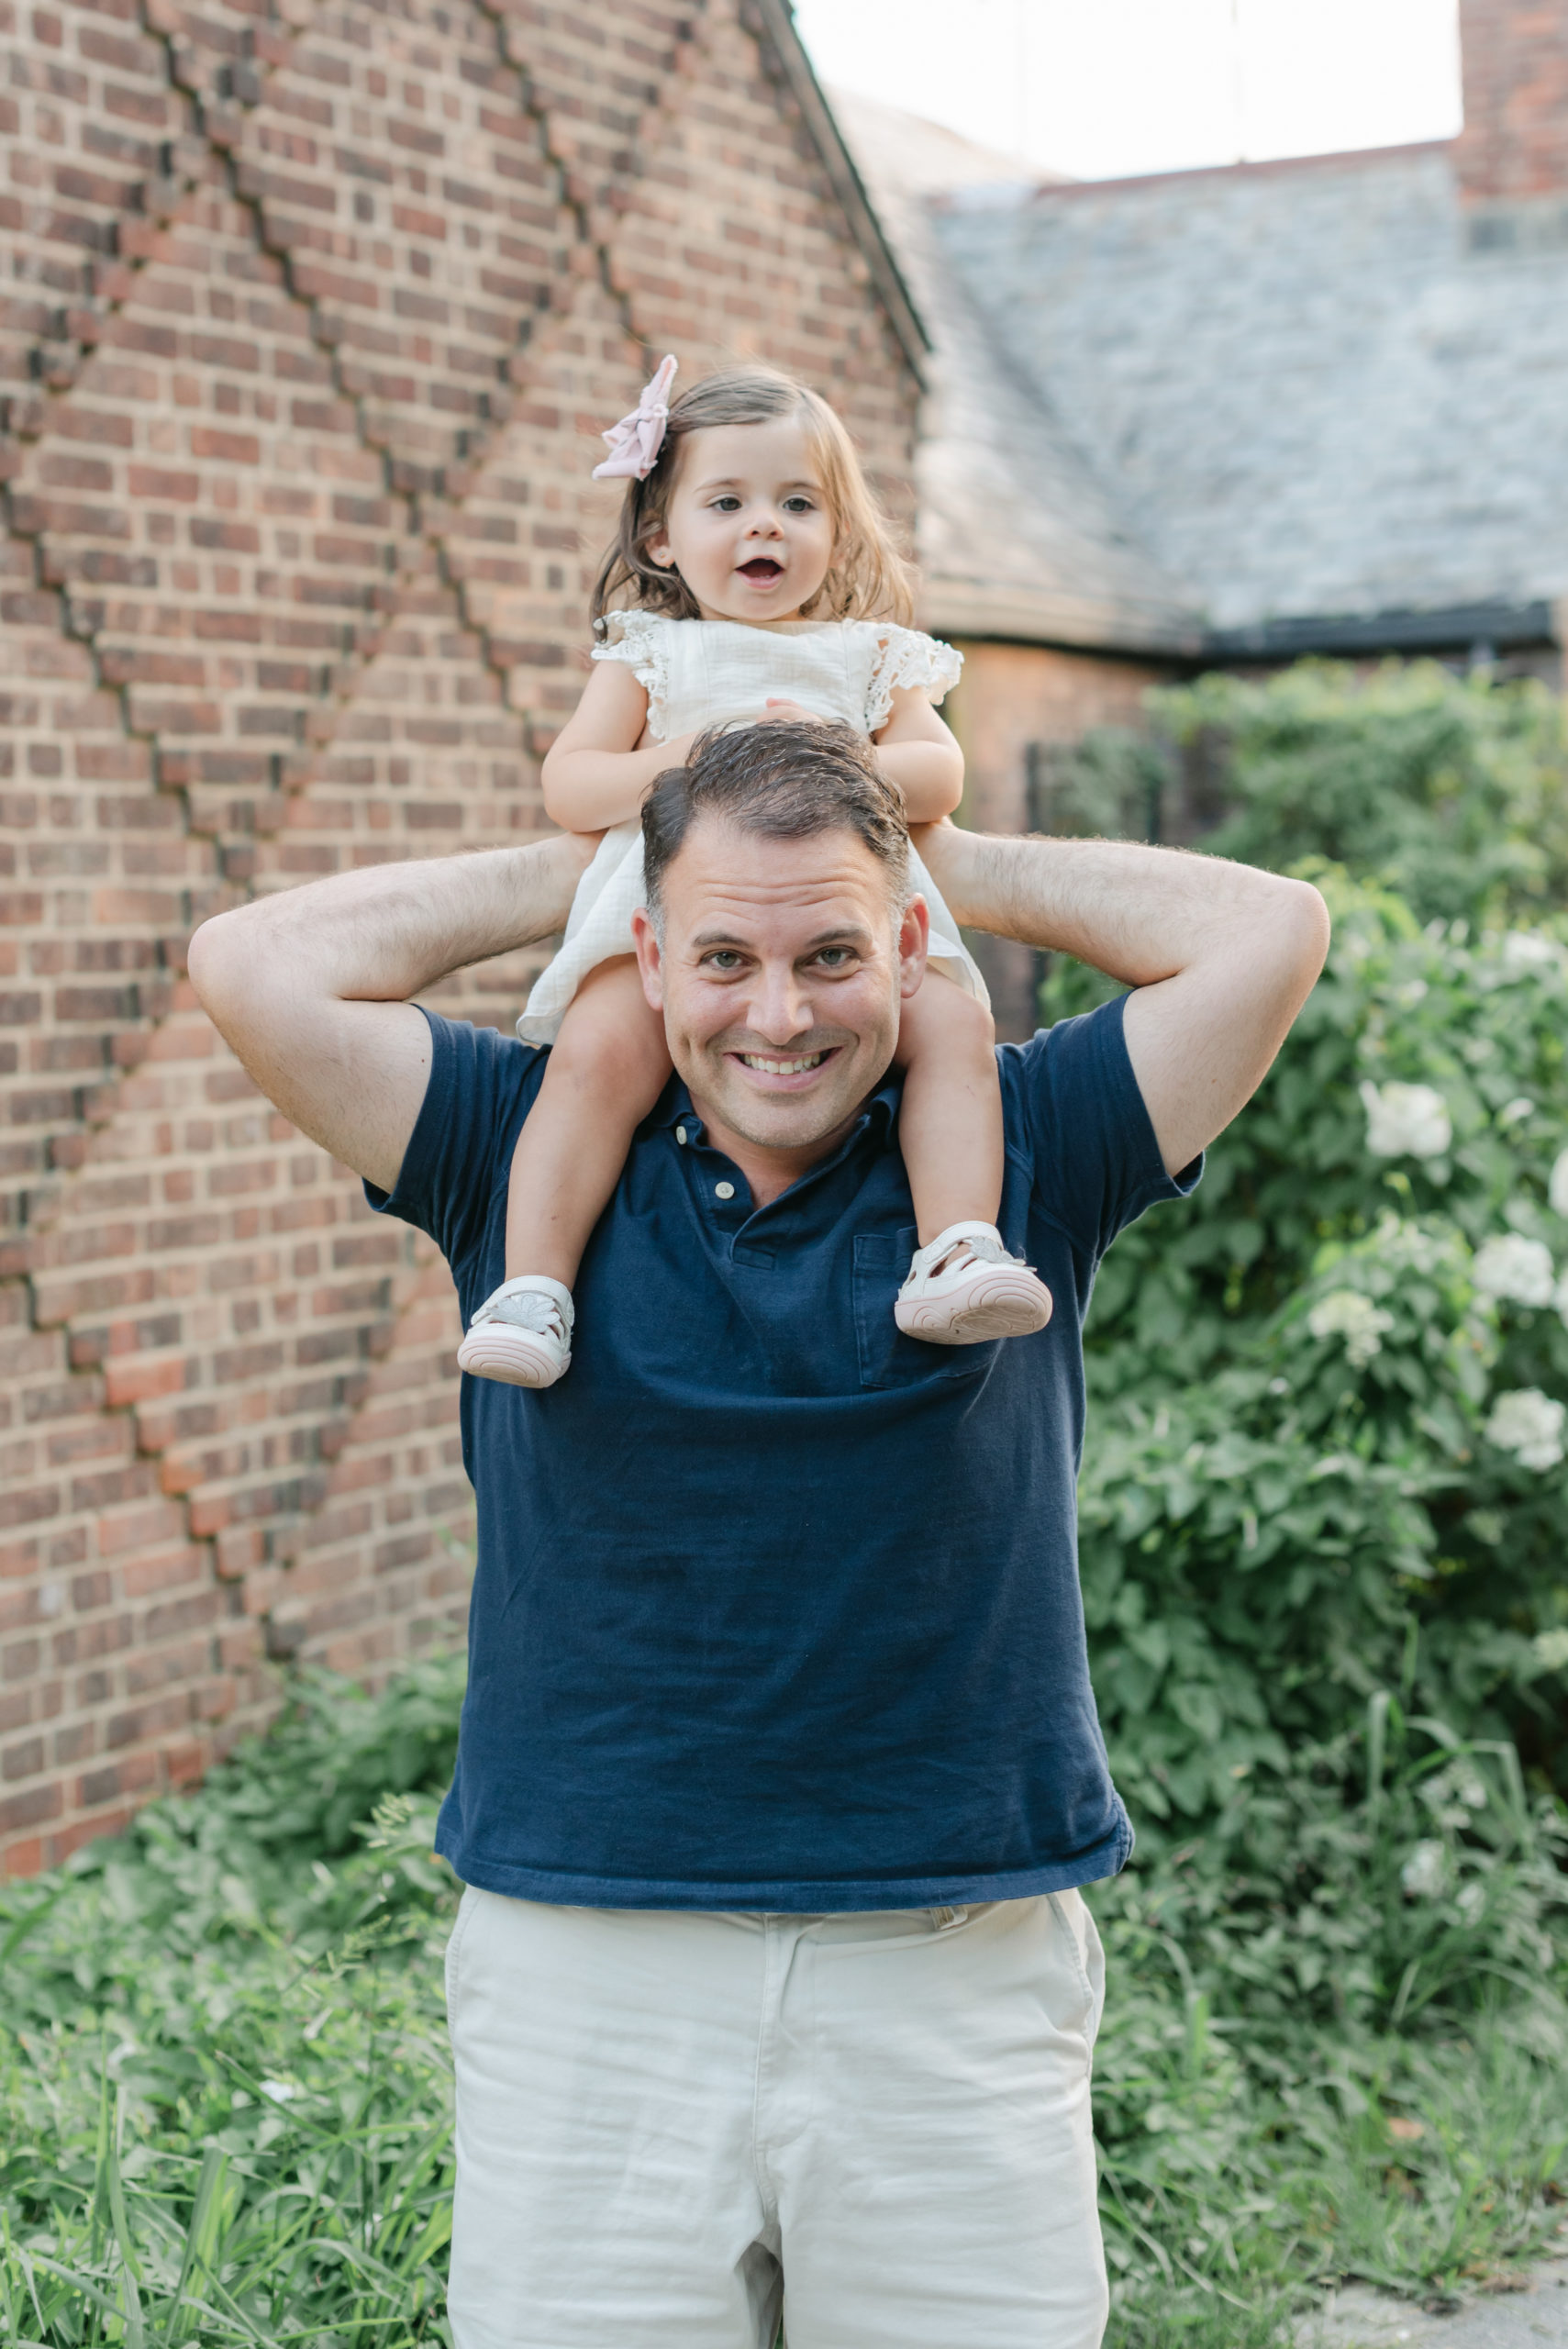 Daughter on dad's shoulders